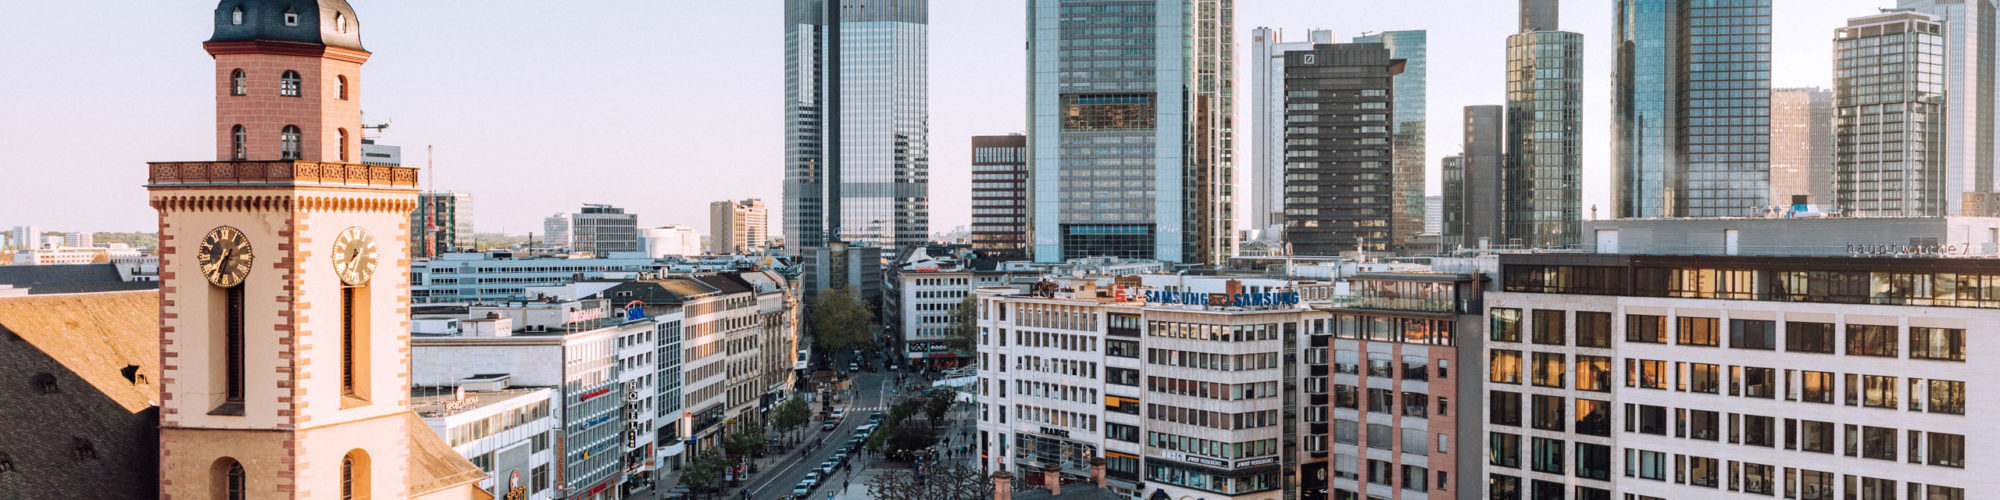 Frankfurt travel agents packages deals